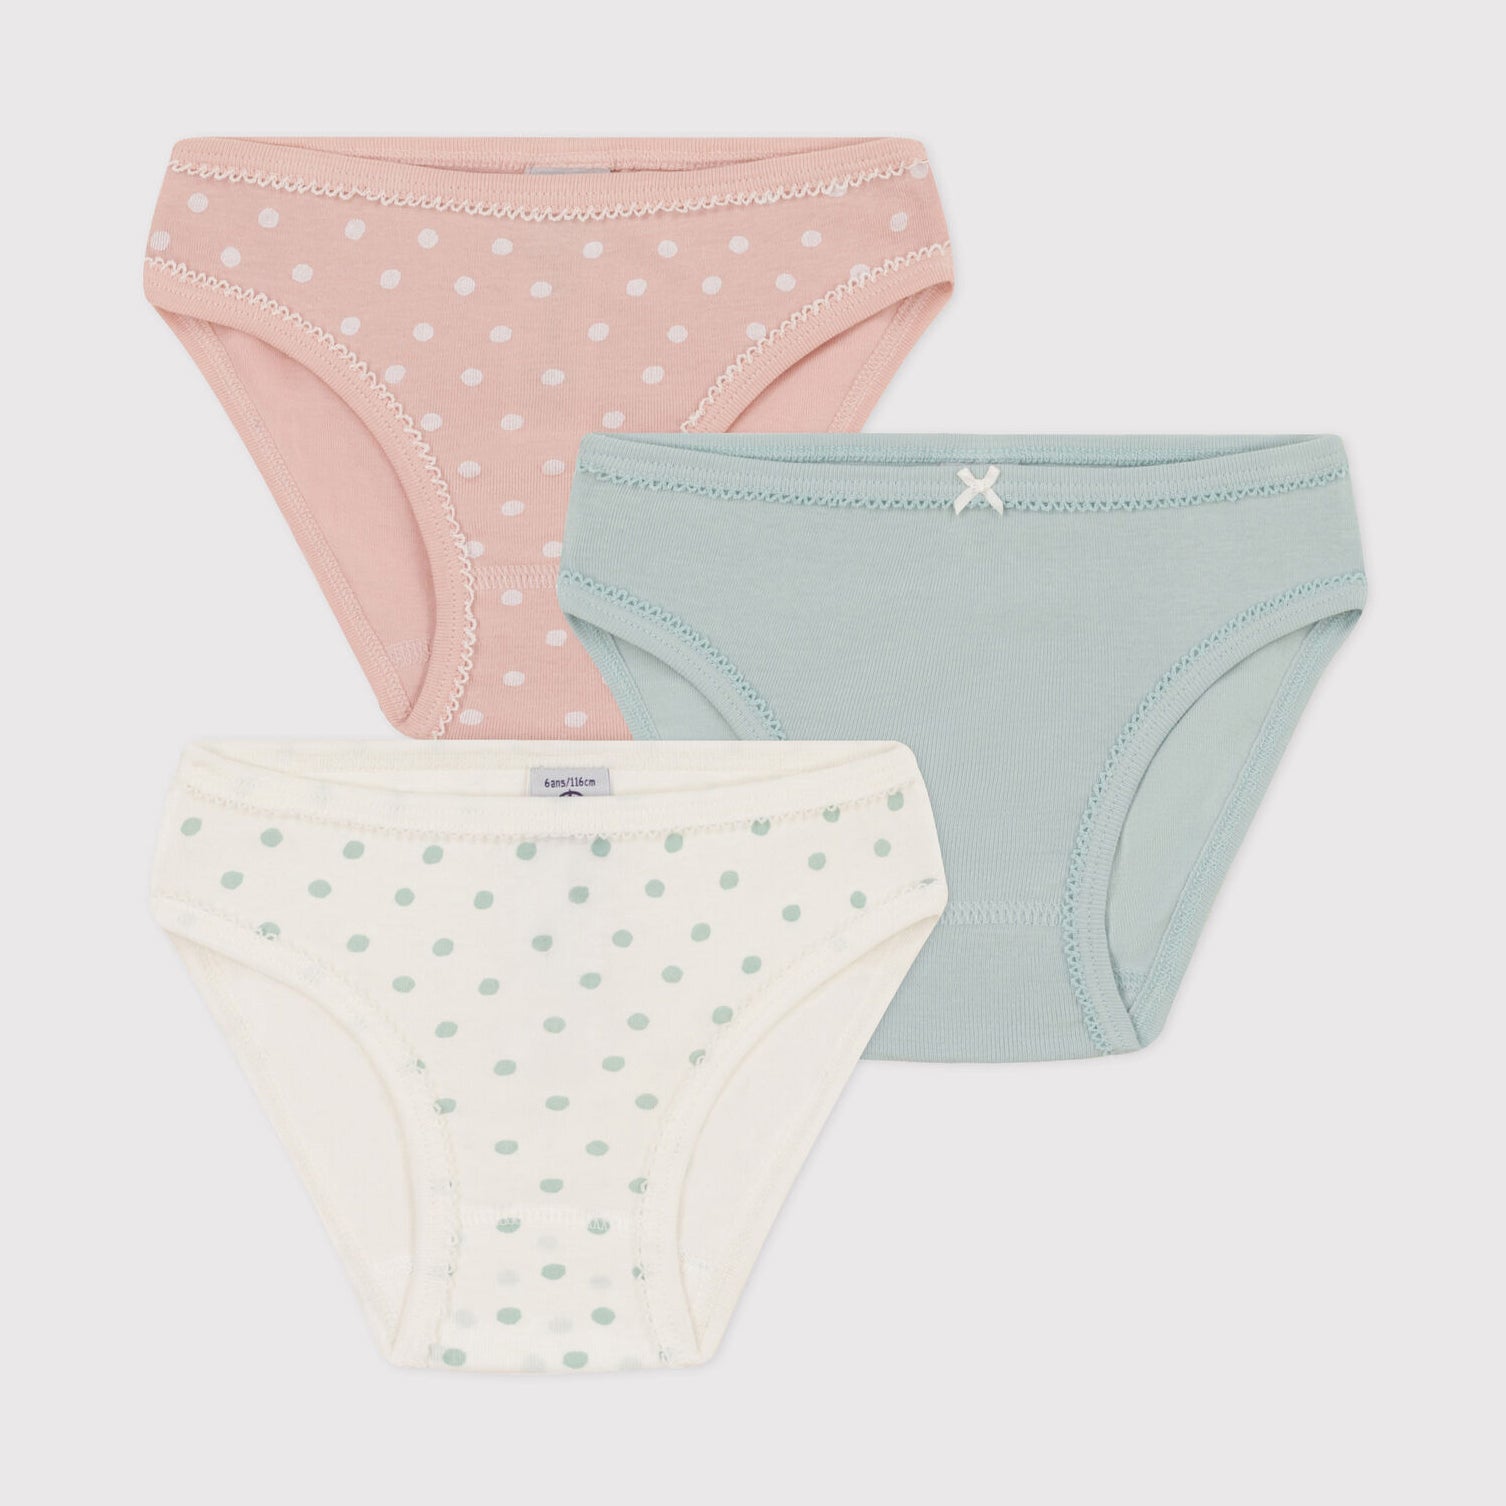 Girls Multicolor Dots Cotton Underwear Set(3 Pack)